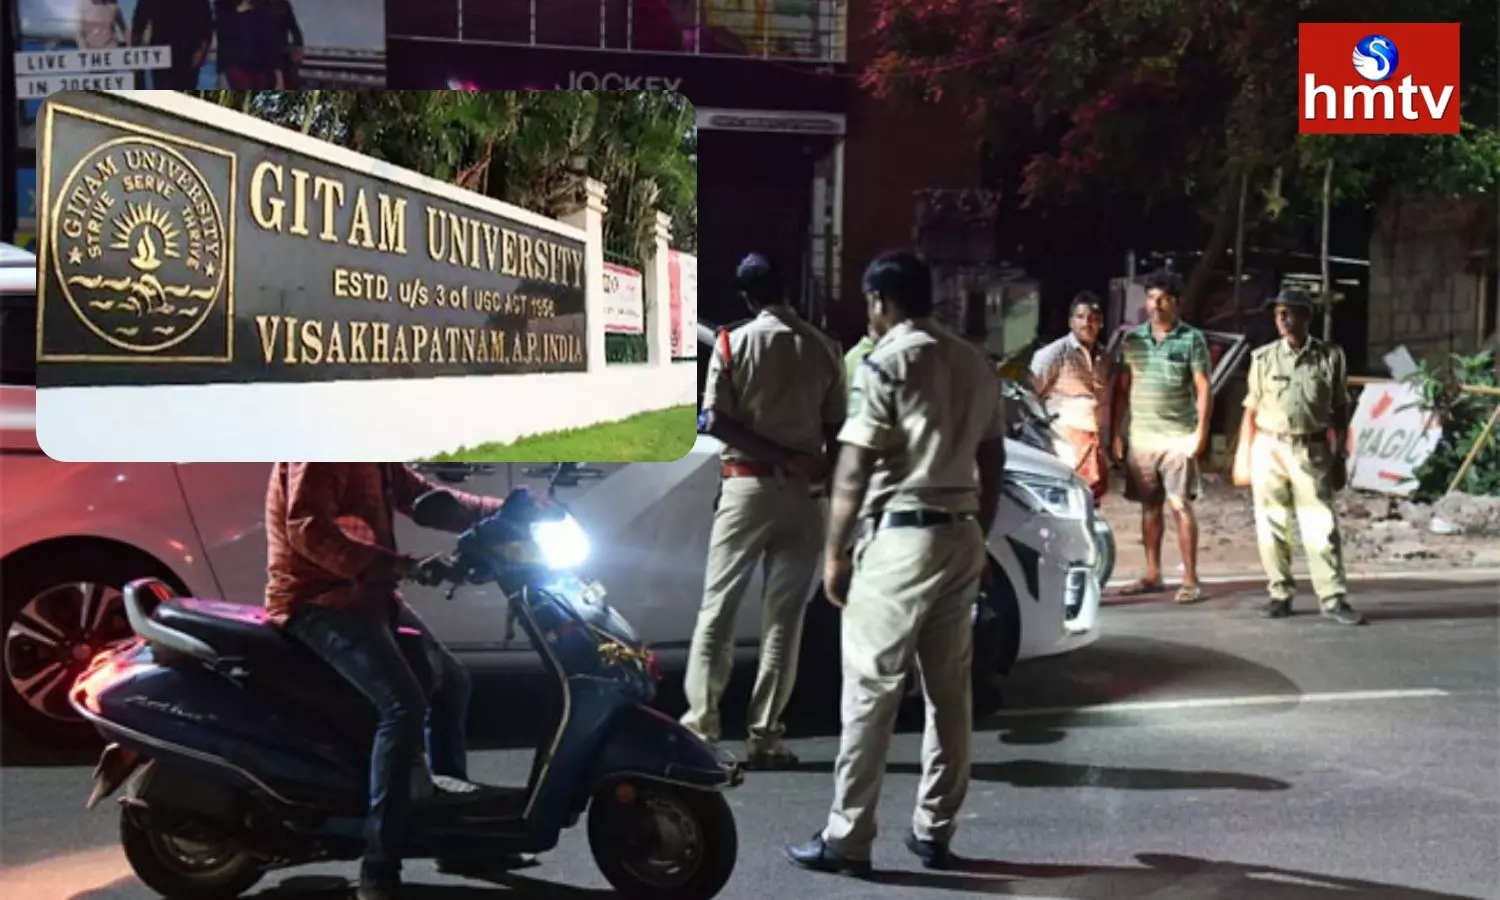 Police Security at Gitam University